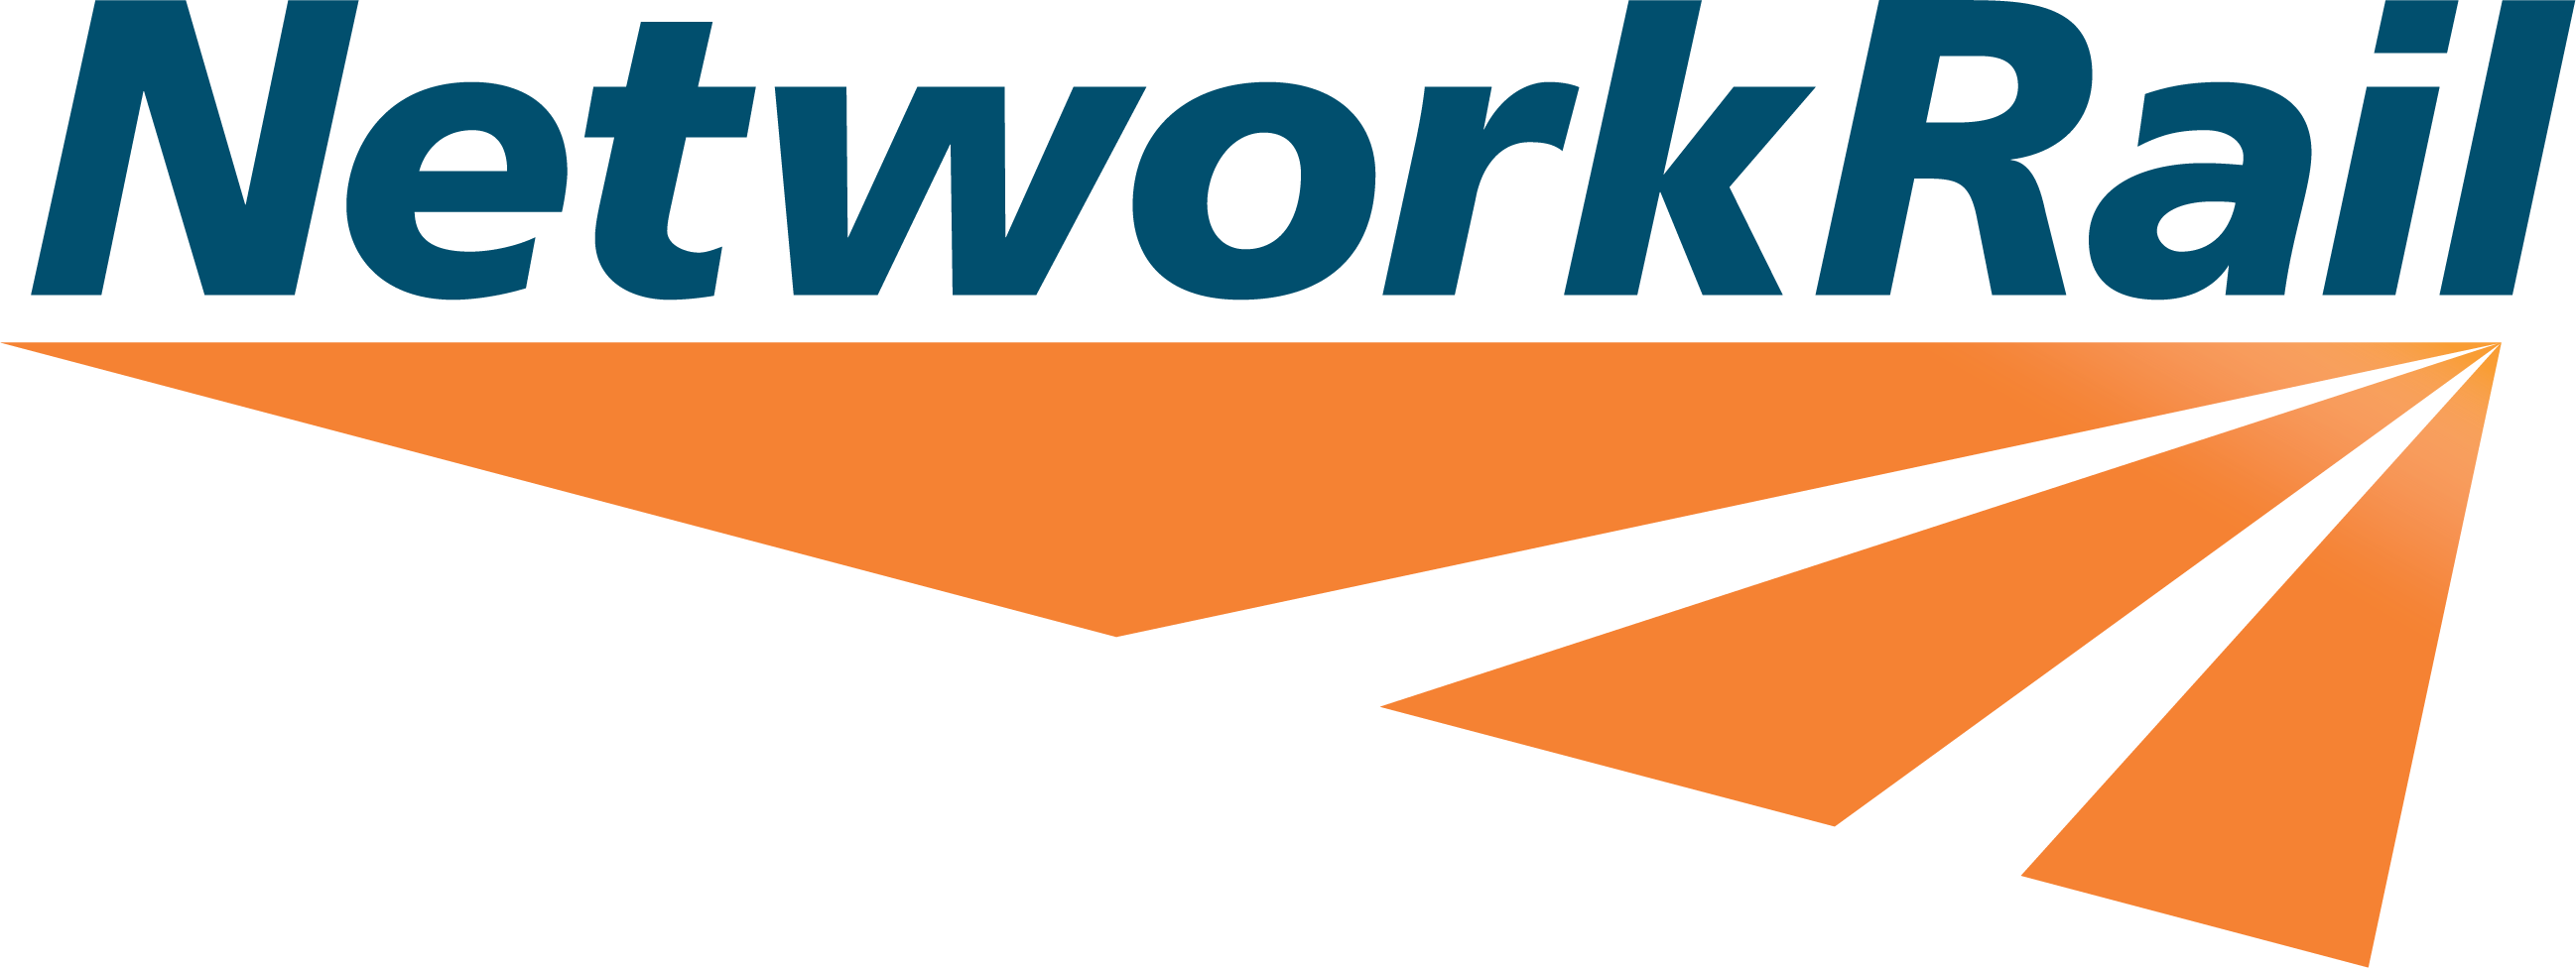 Network rail logo for web